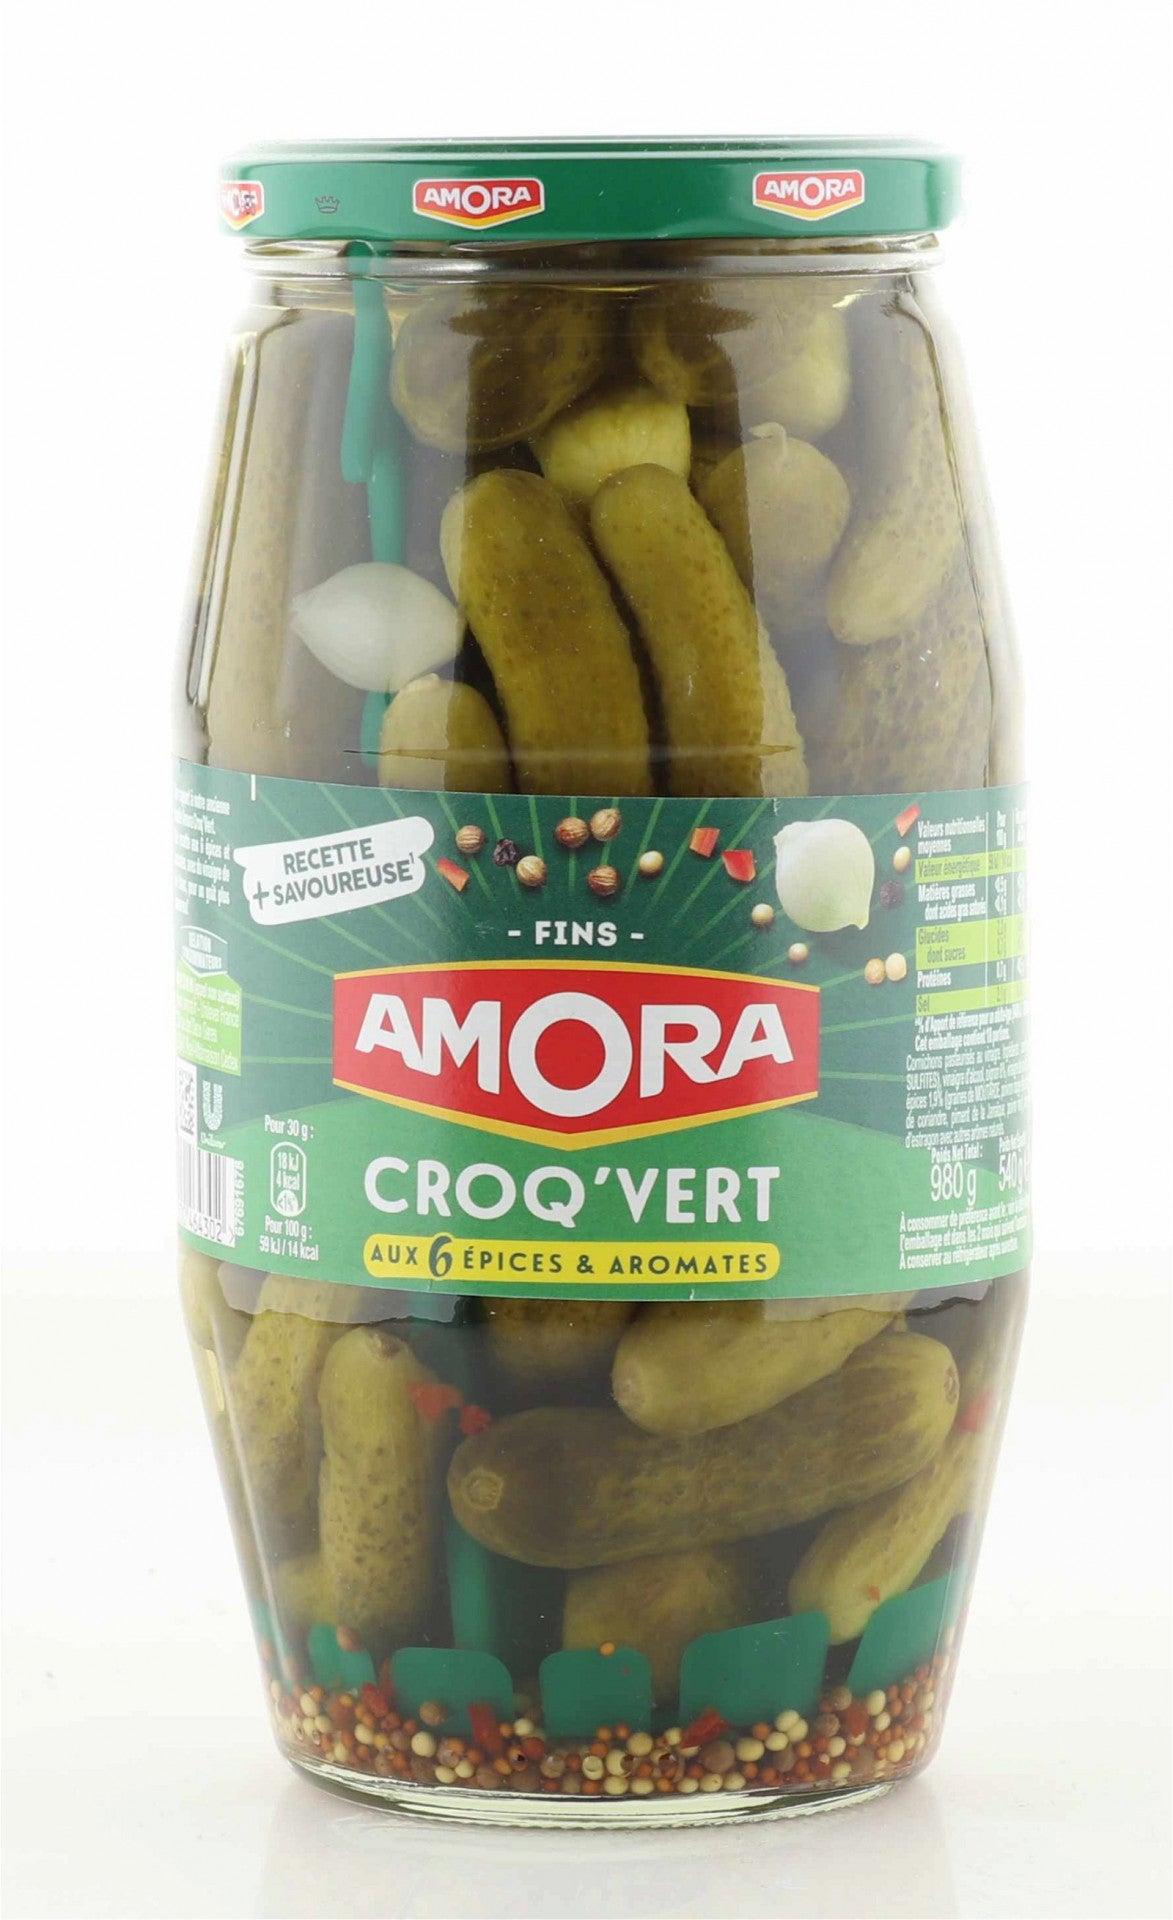 Amora Cornichons Croq Vert Fins 980g / Atg. 540g